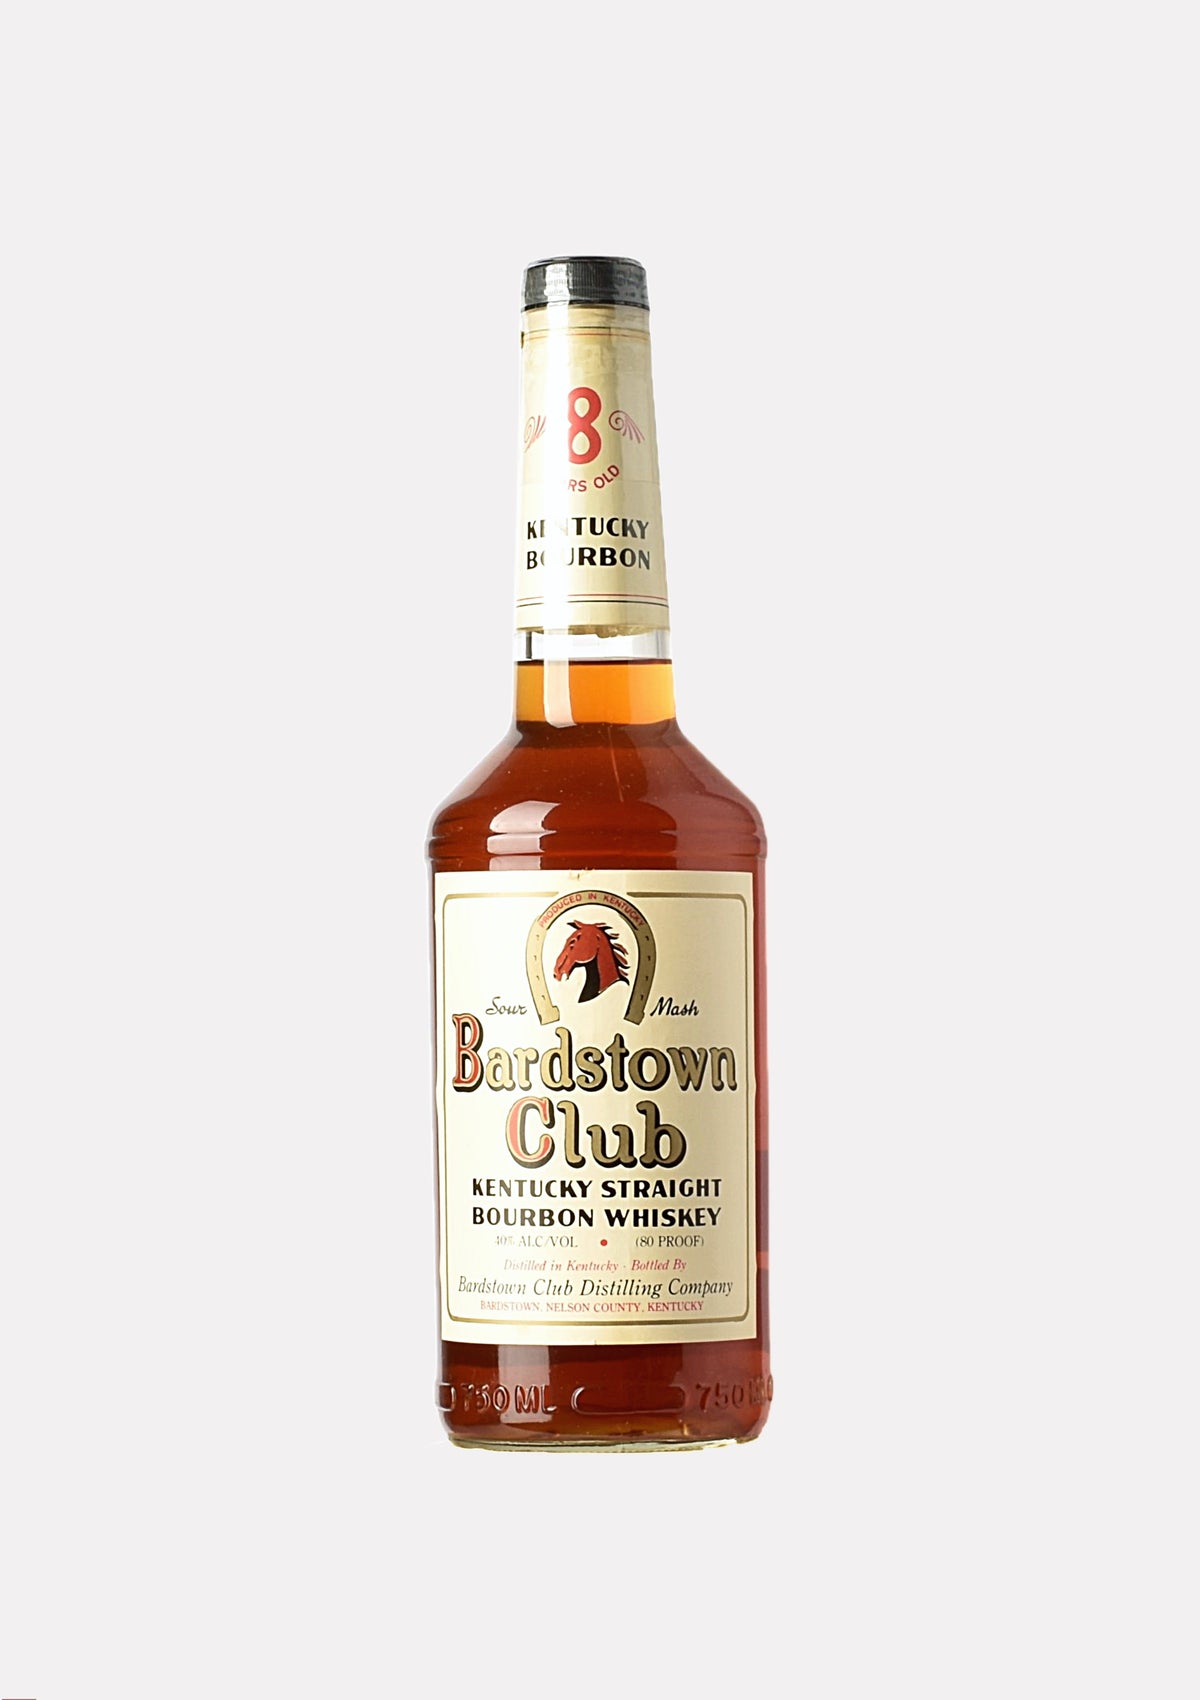 Bardstown Club Kentucky Straight Bourbon Whiskey 8 years